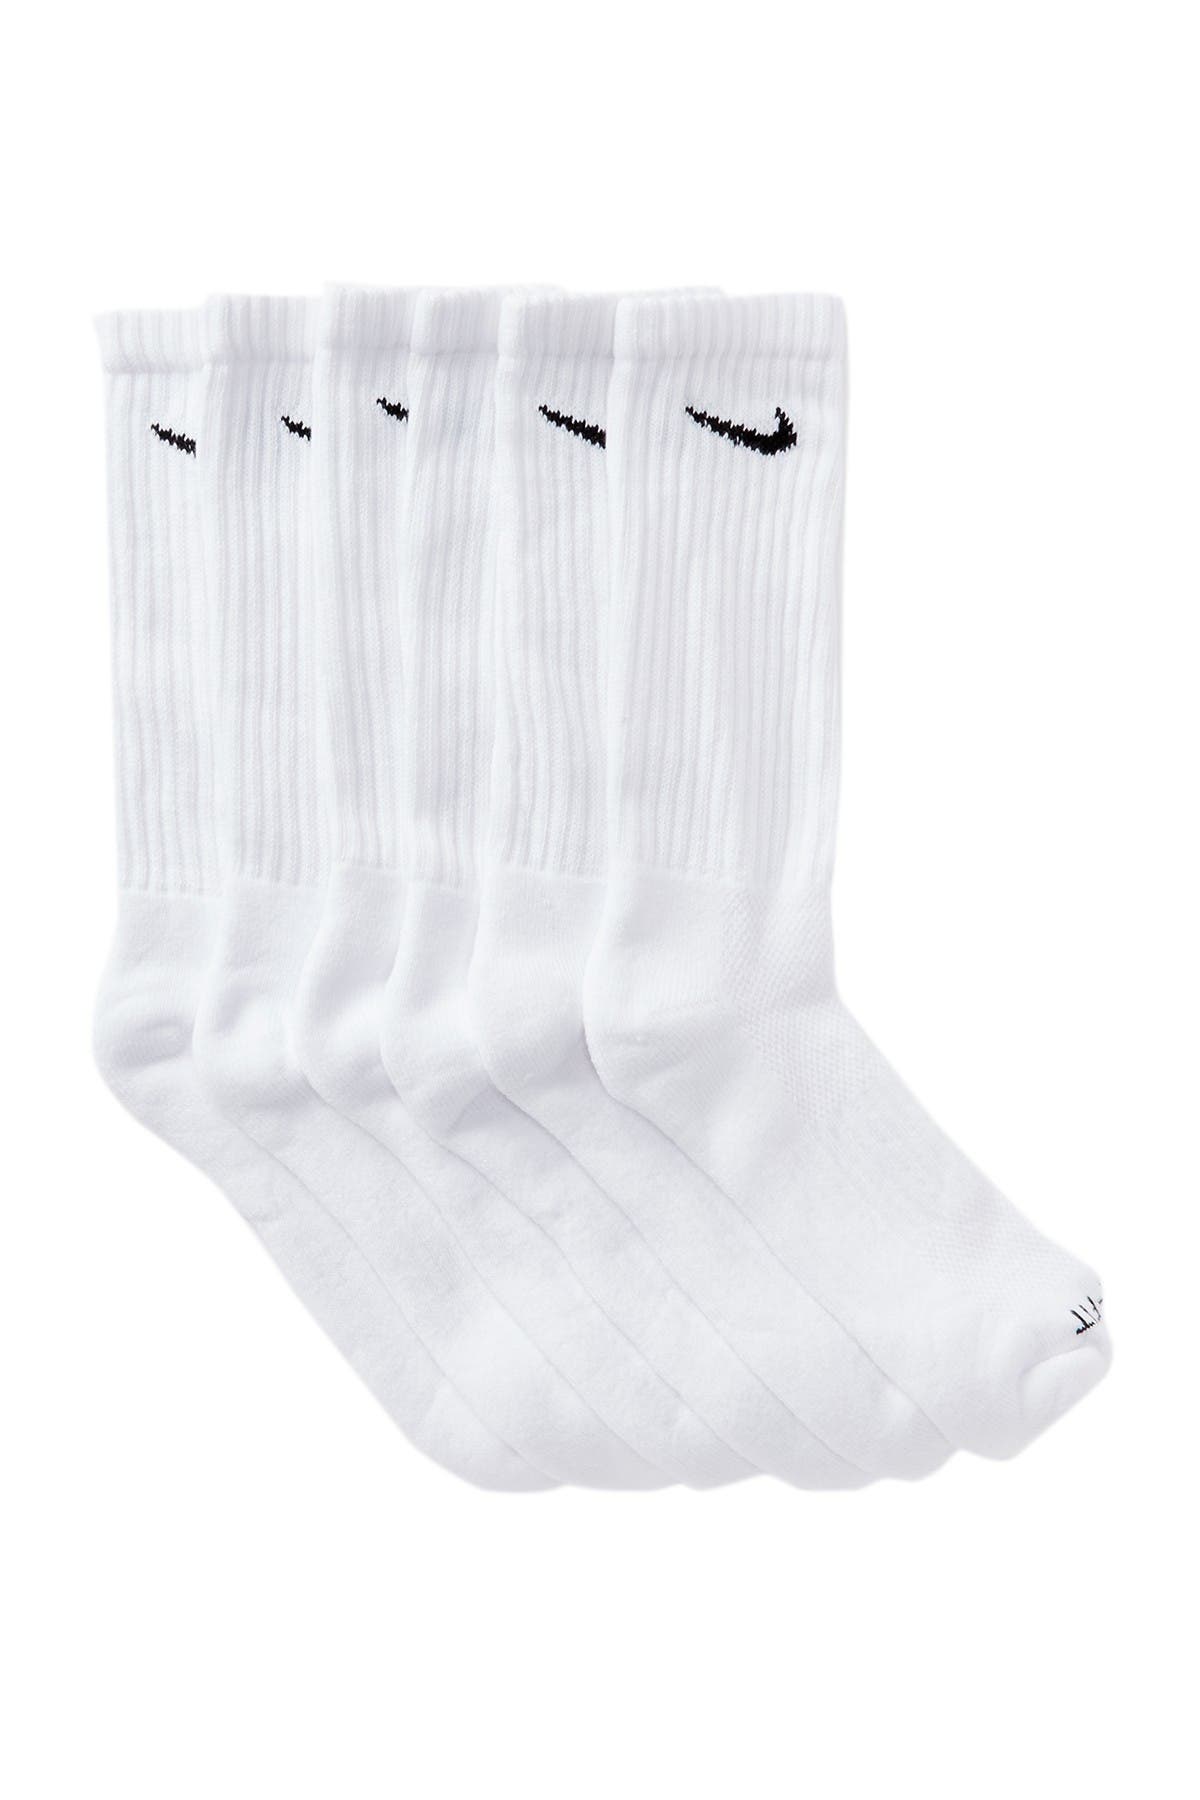 Nike | Dri-Fit Crew Socks - Pack of 6 